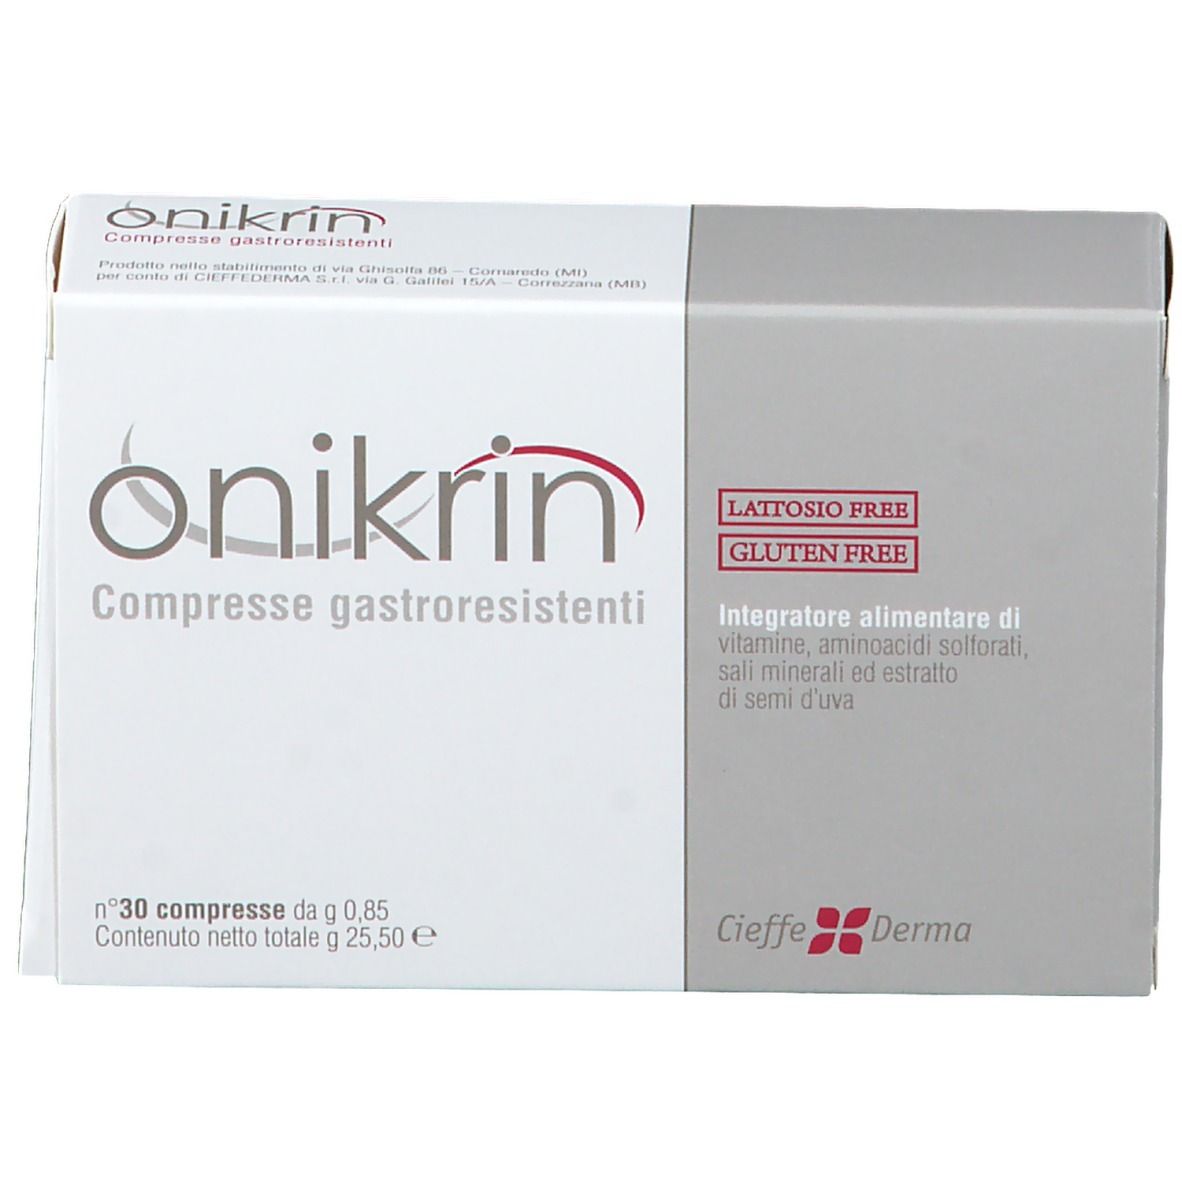 Onikrin